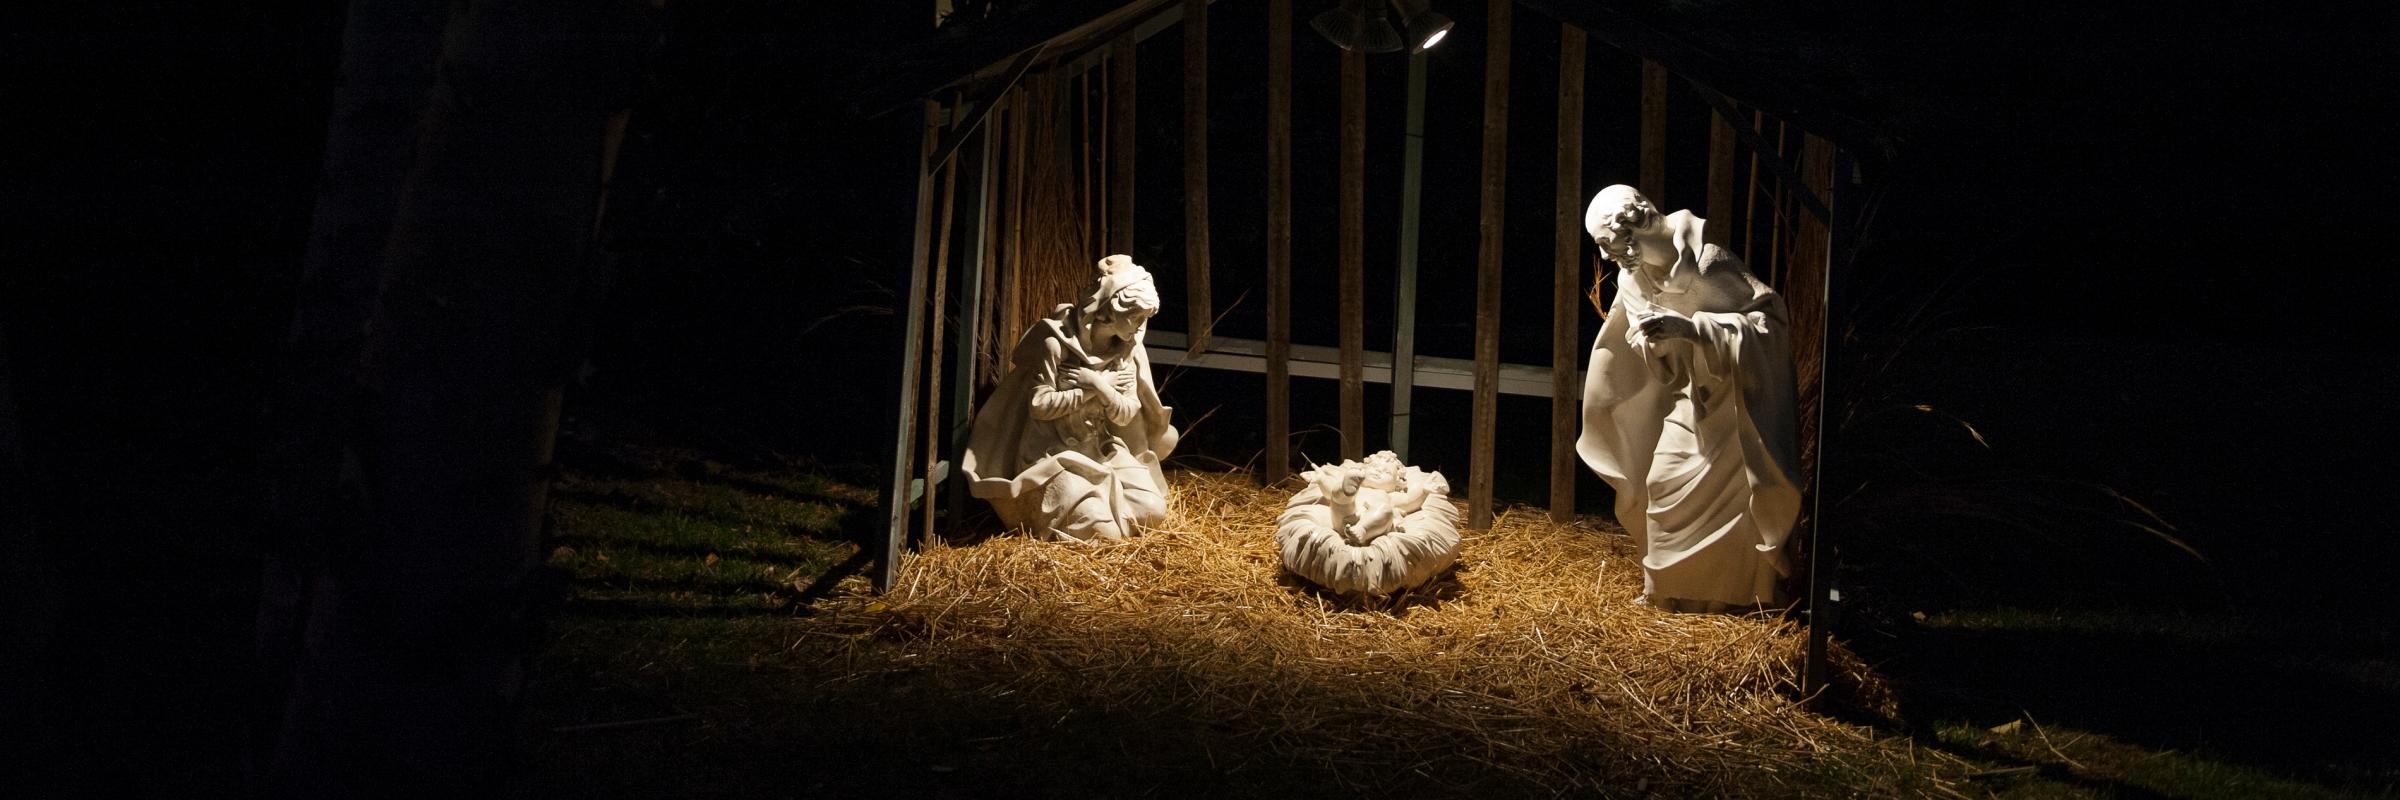 Campus nativity scene by McMahon Hall